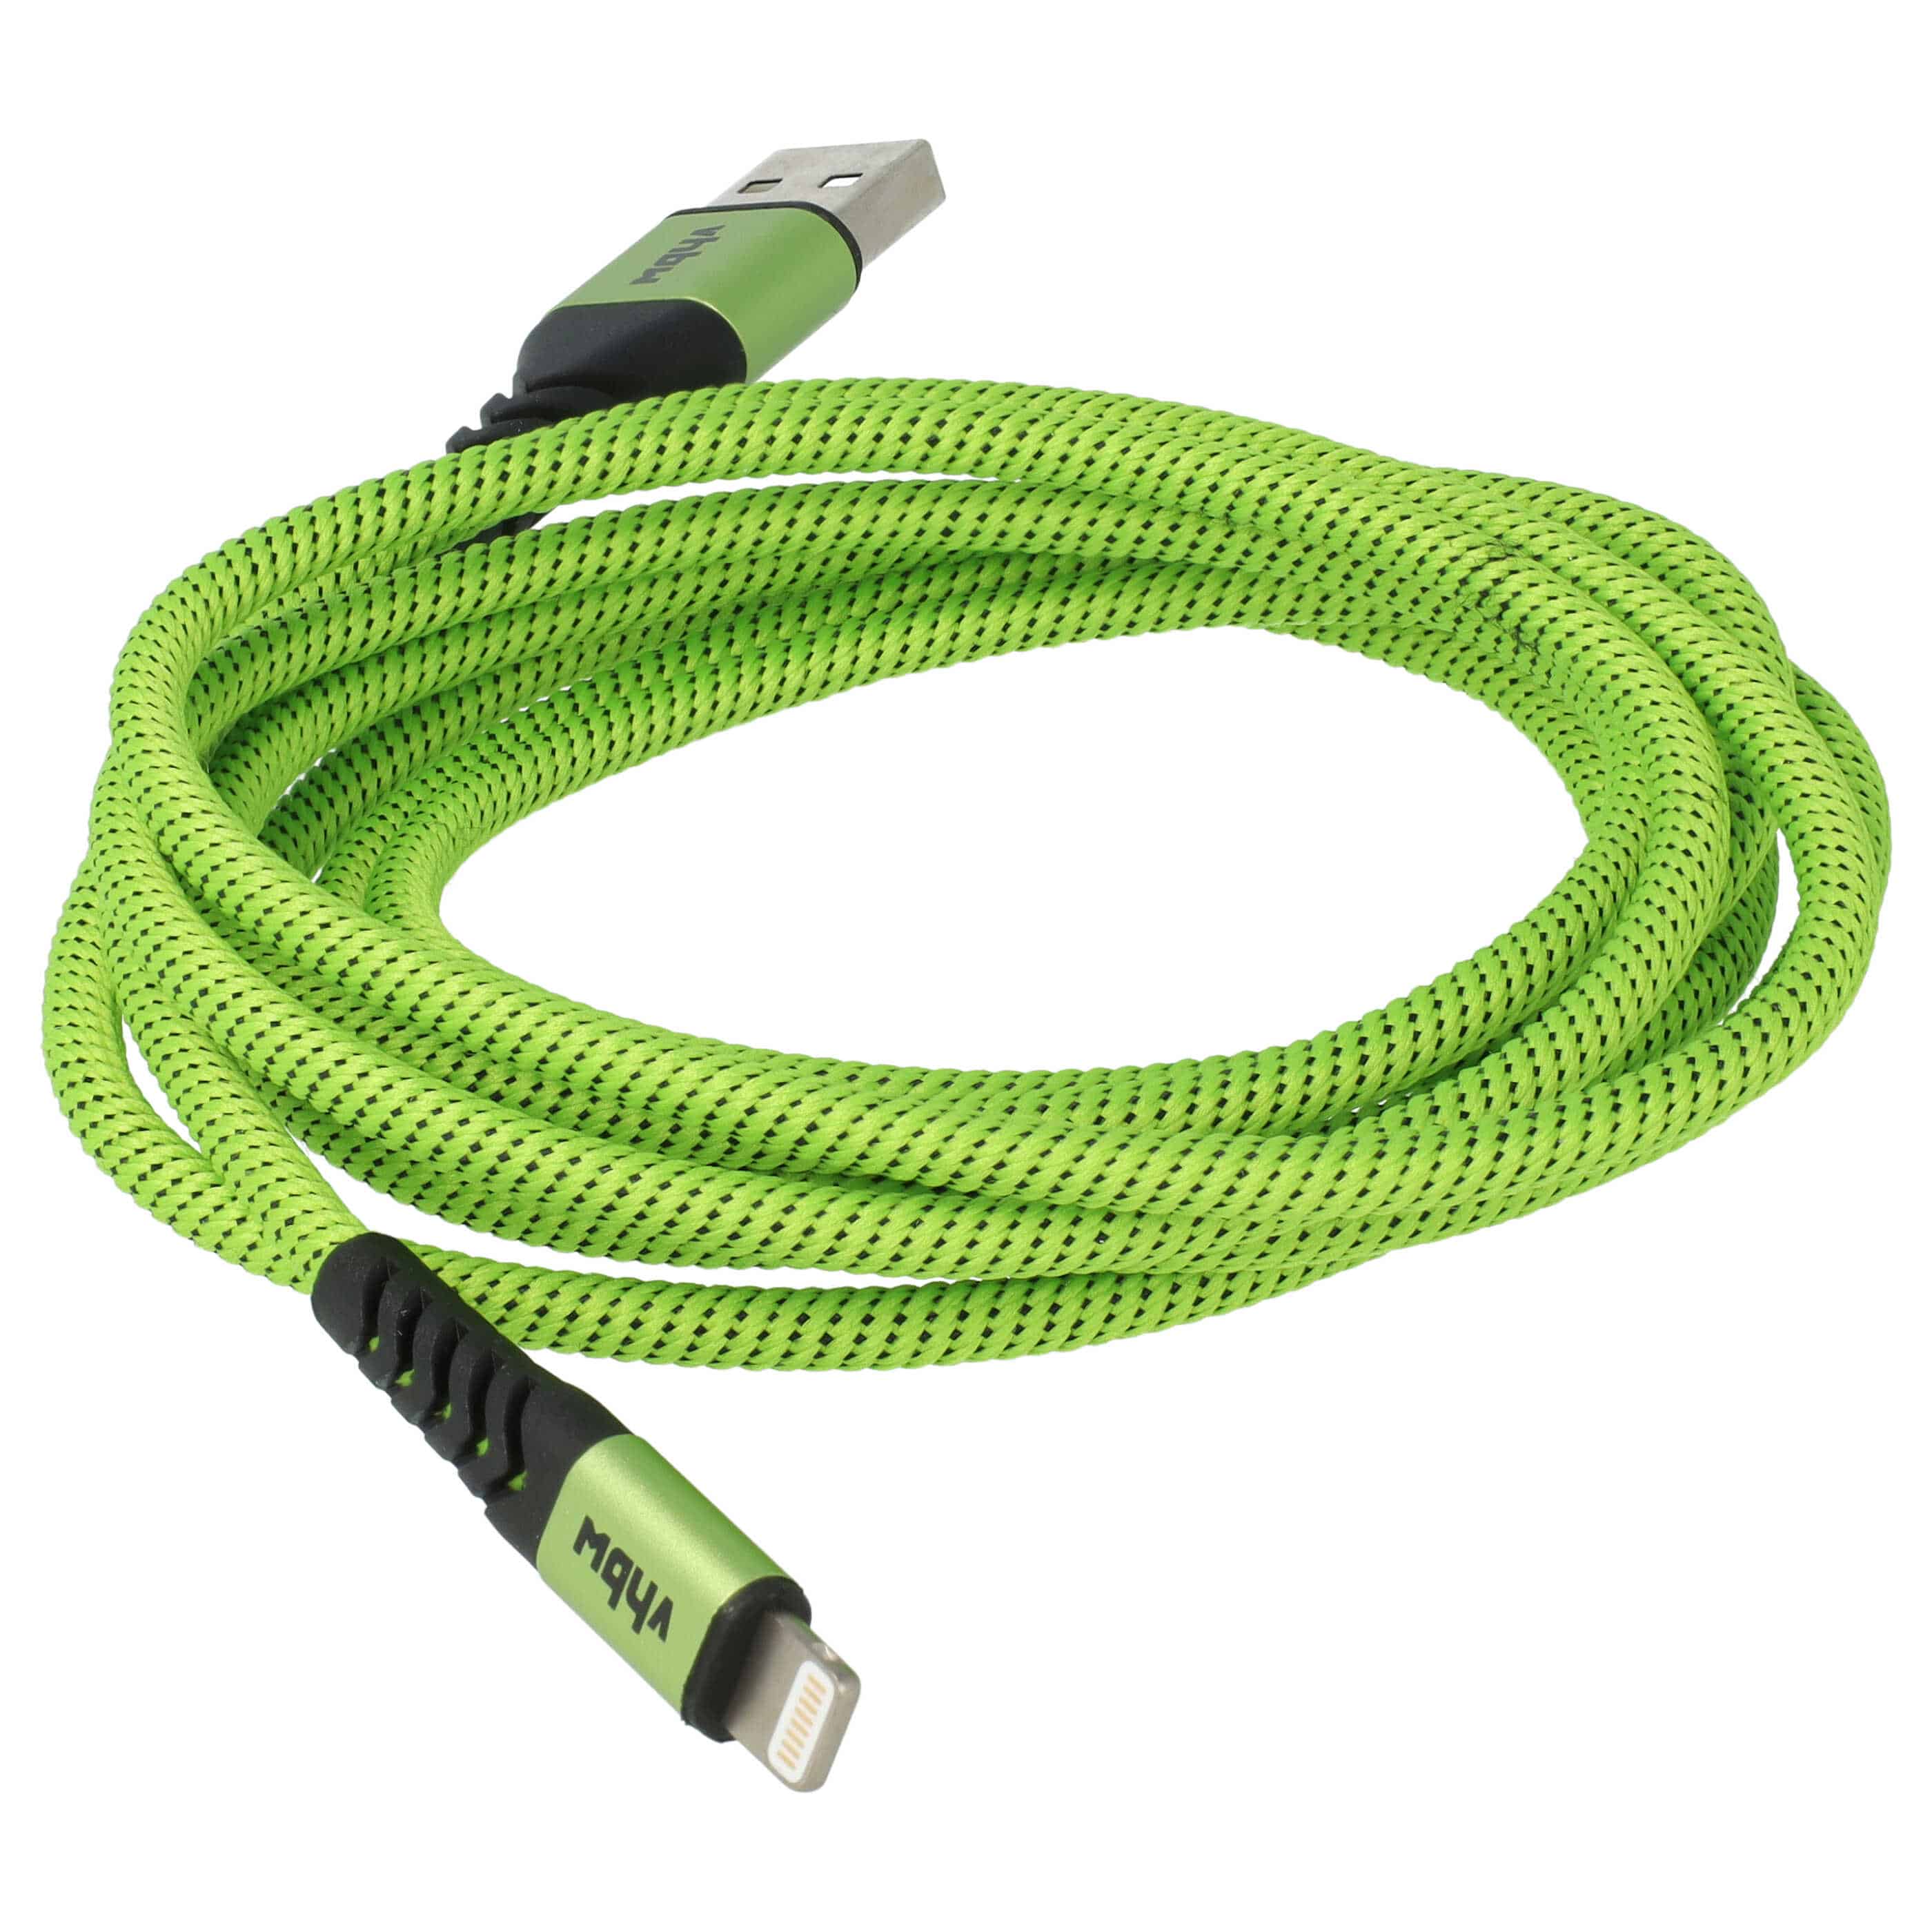 Câble Lightning vers USB A pour iOS - noir / vert, 180cm